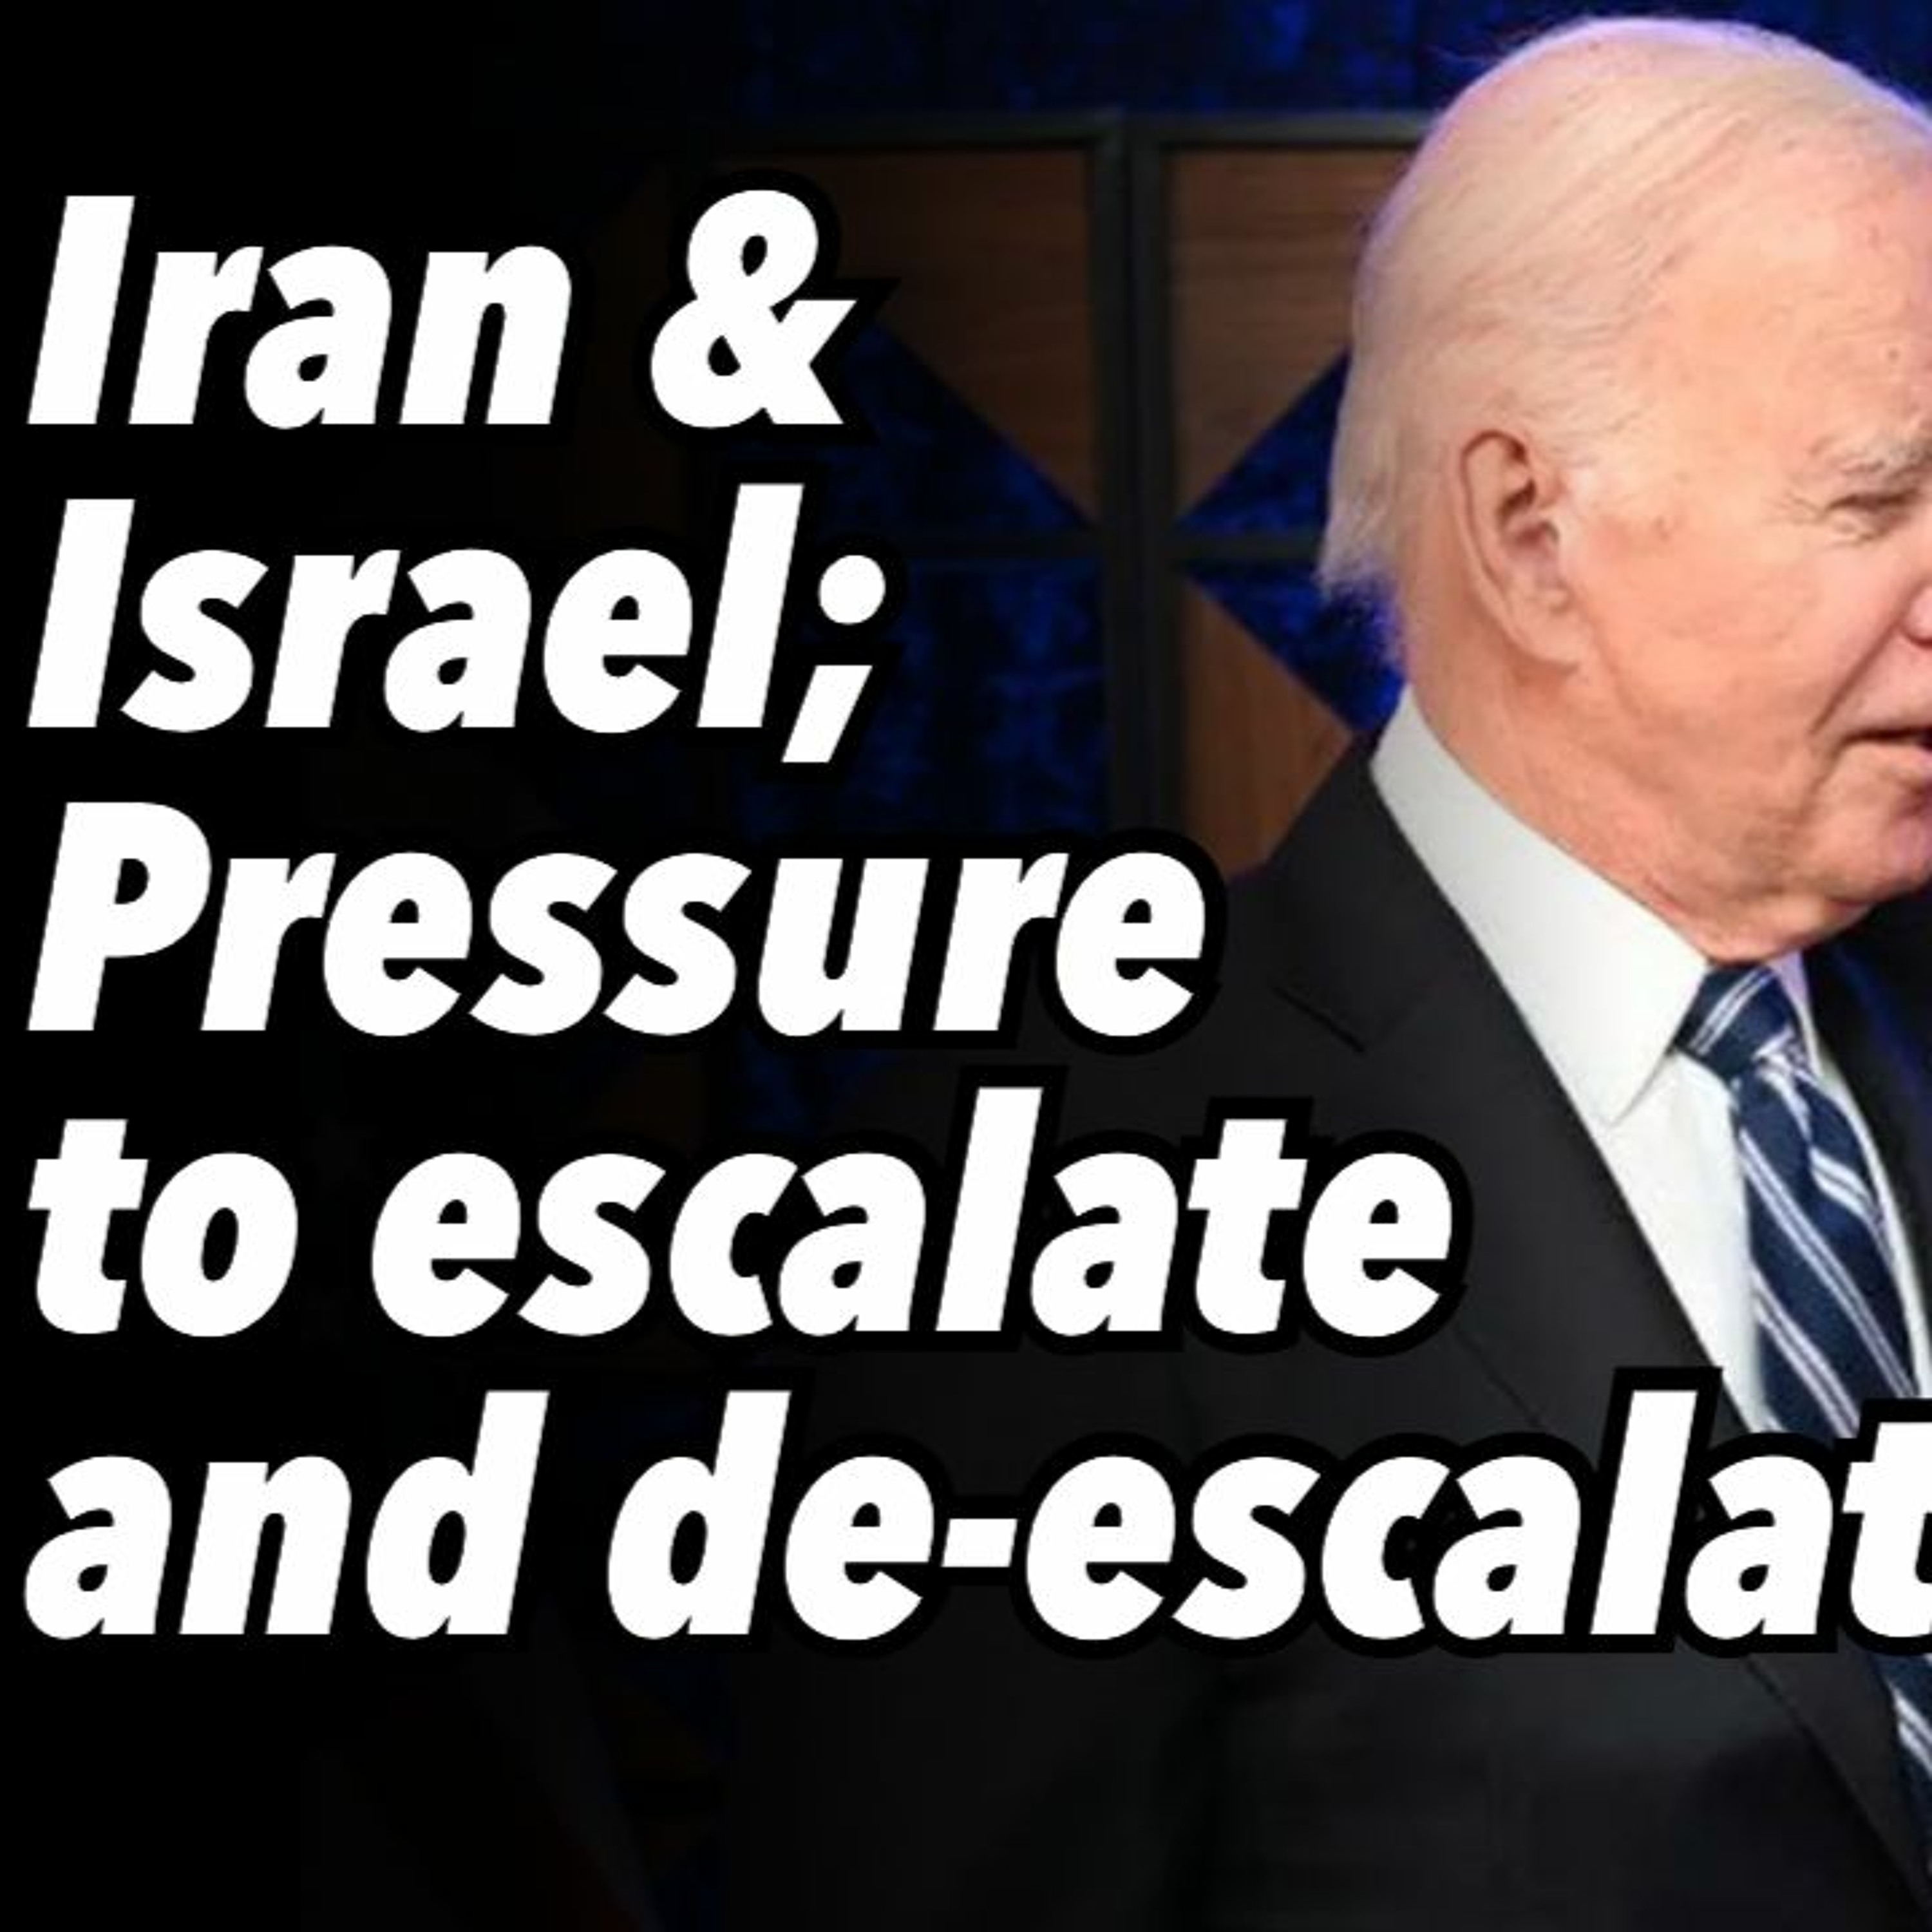 Iran and Israel; Pressure to escalate and de-escalate